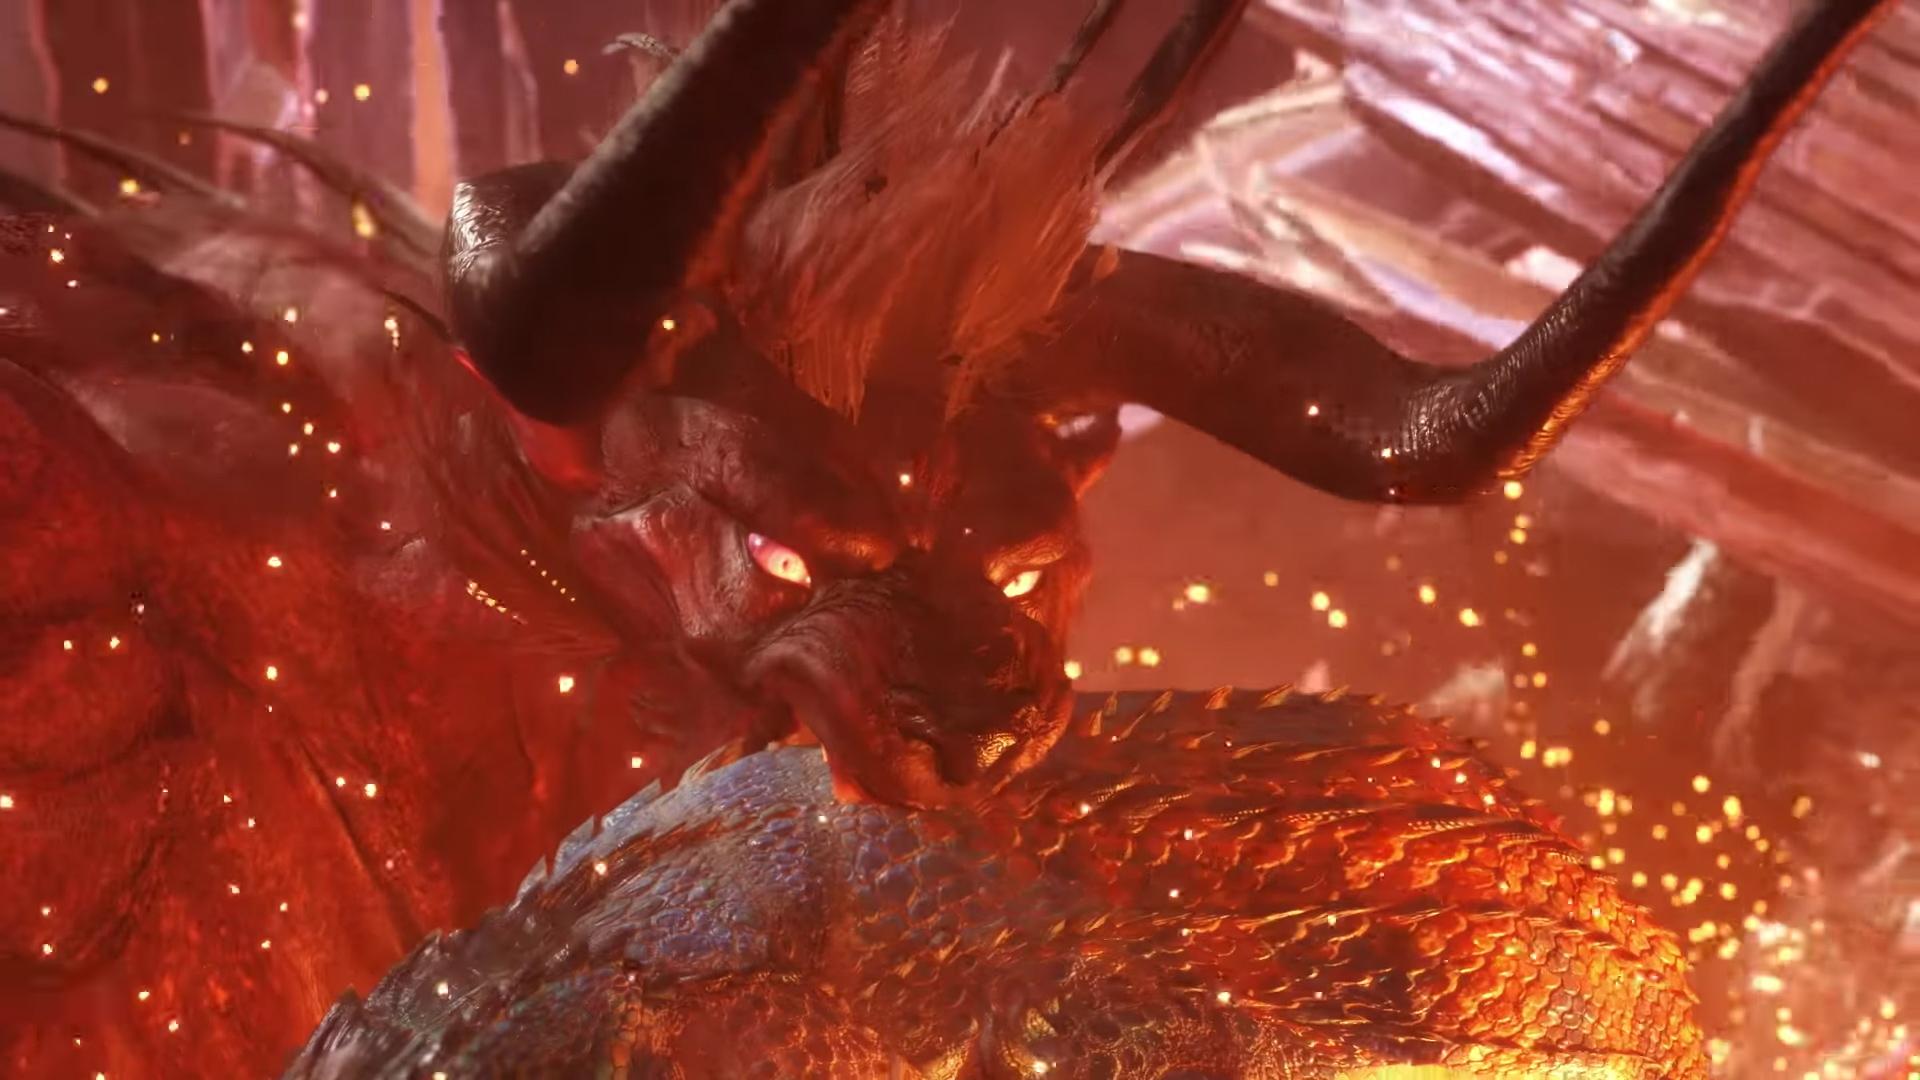 Final Fantasy XIV's Behemoth won't hit Monster Hunter: World until